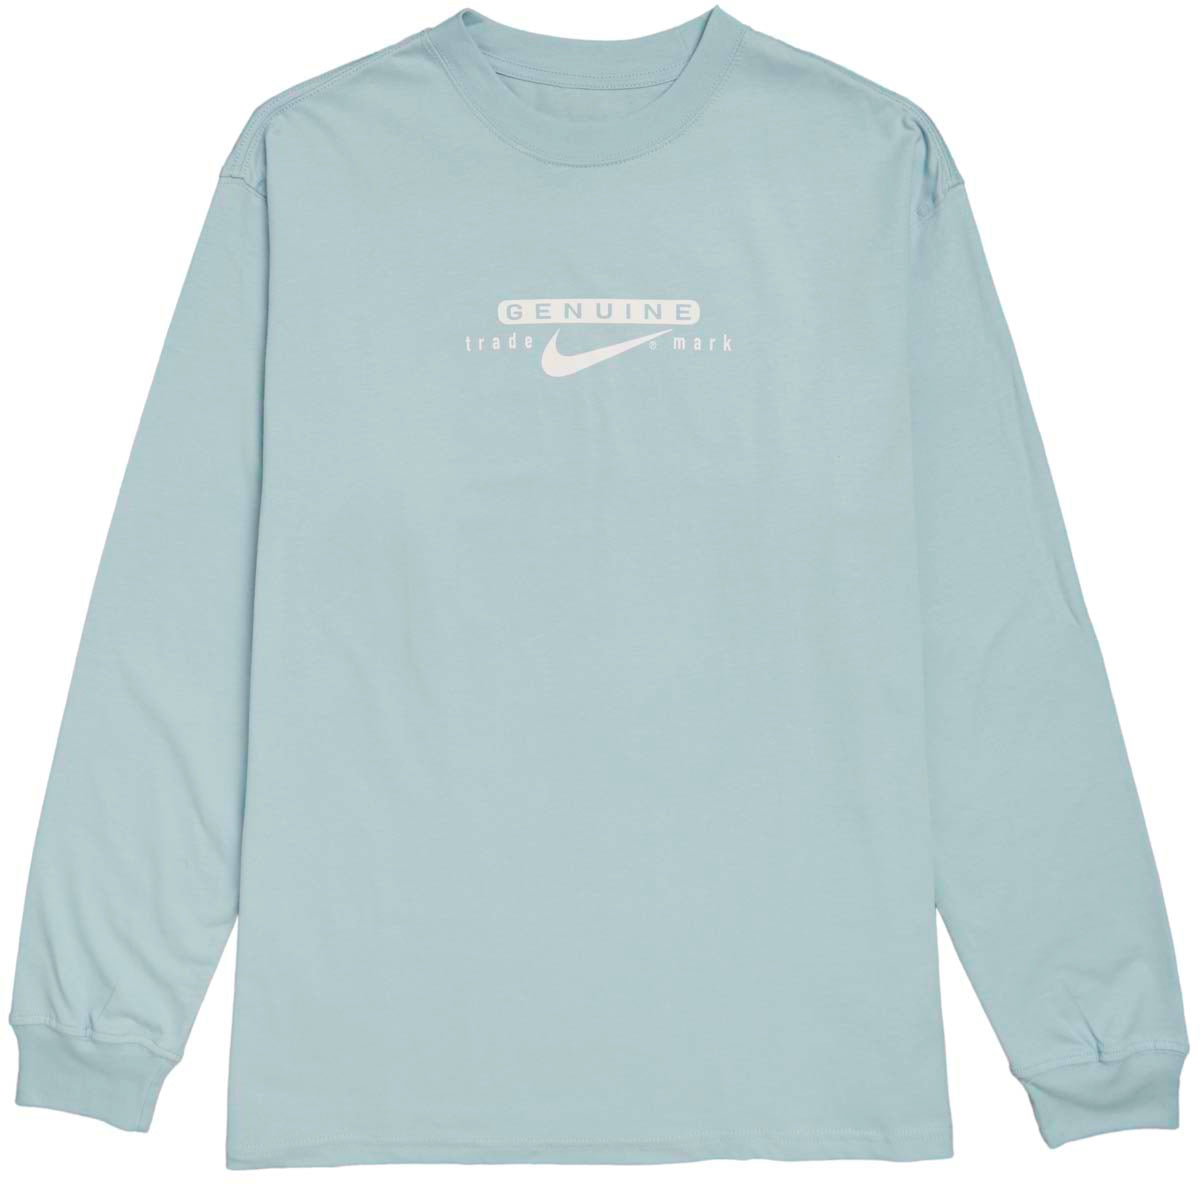 Nike SB Genuine Long Sleeve T-Shirt - Ocean Bliss image 1